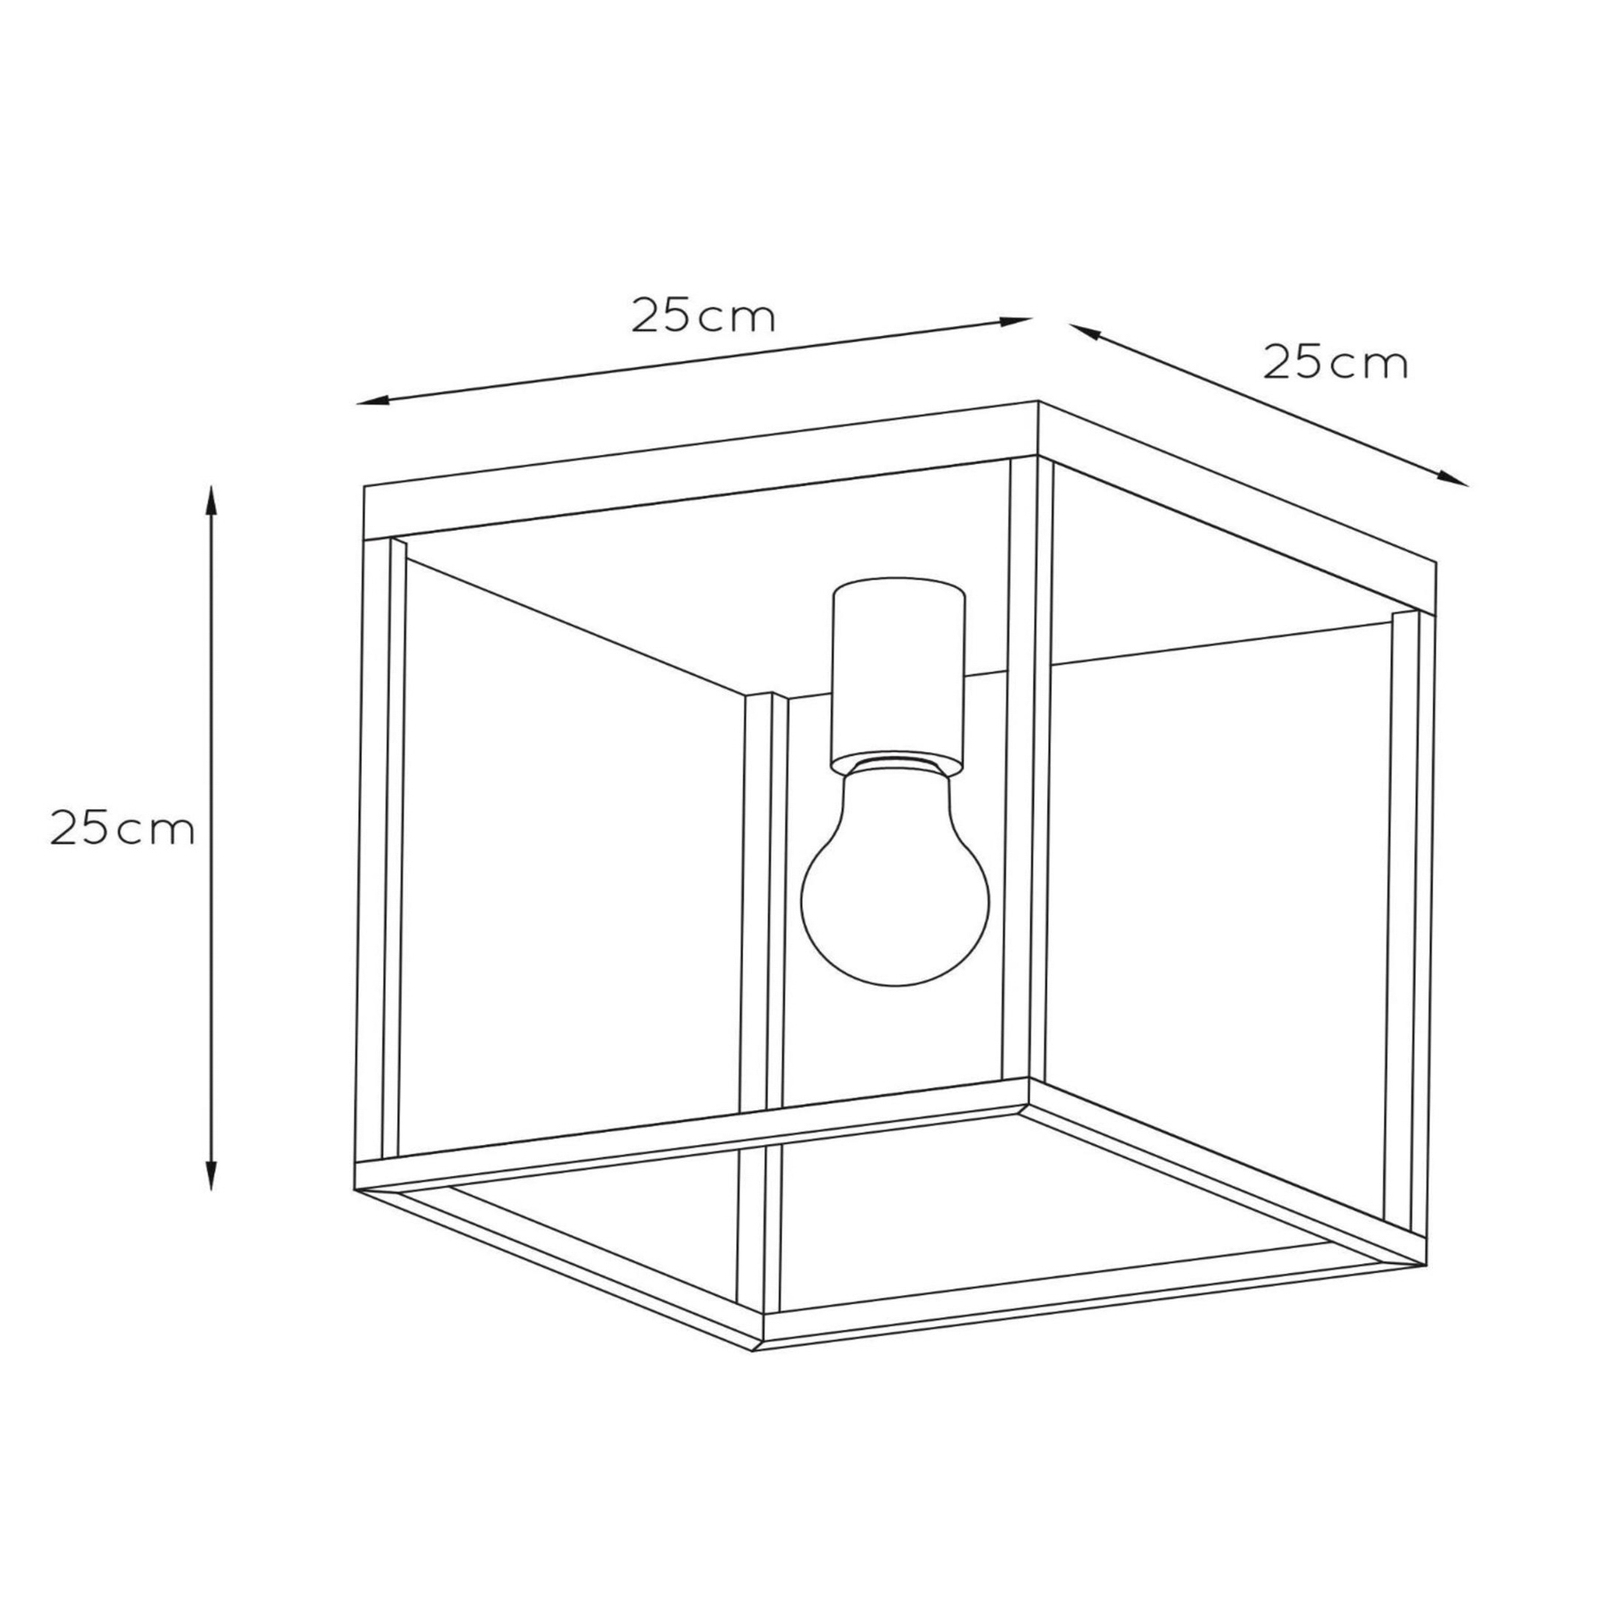 Cube-shaped ceiling light Arthur